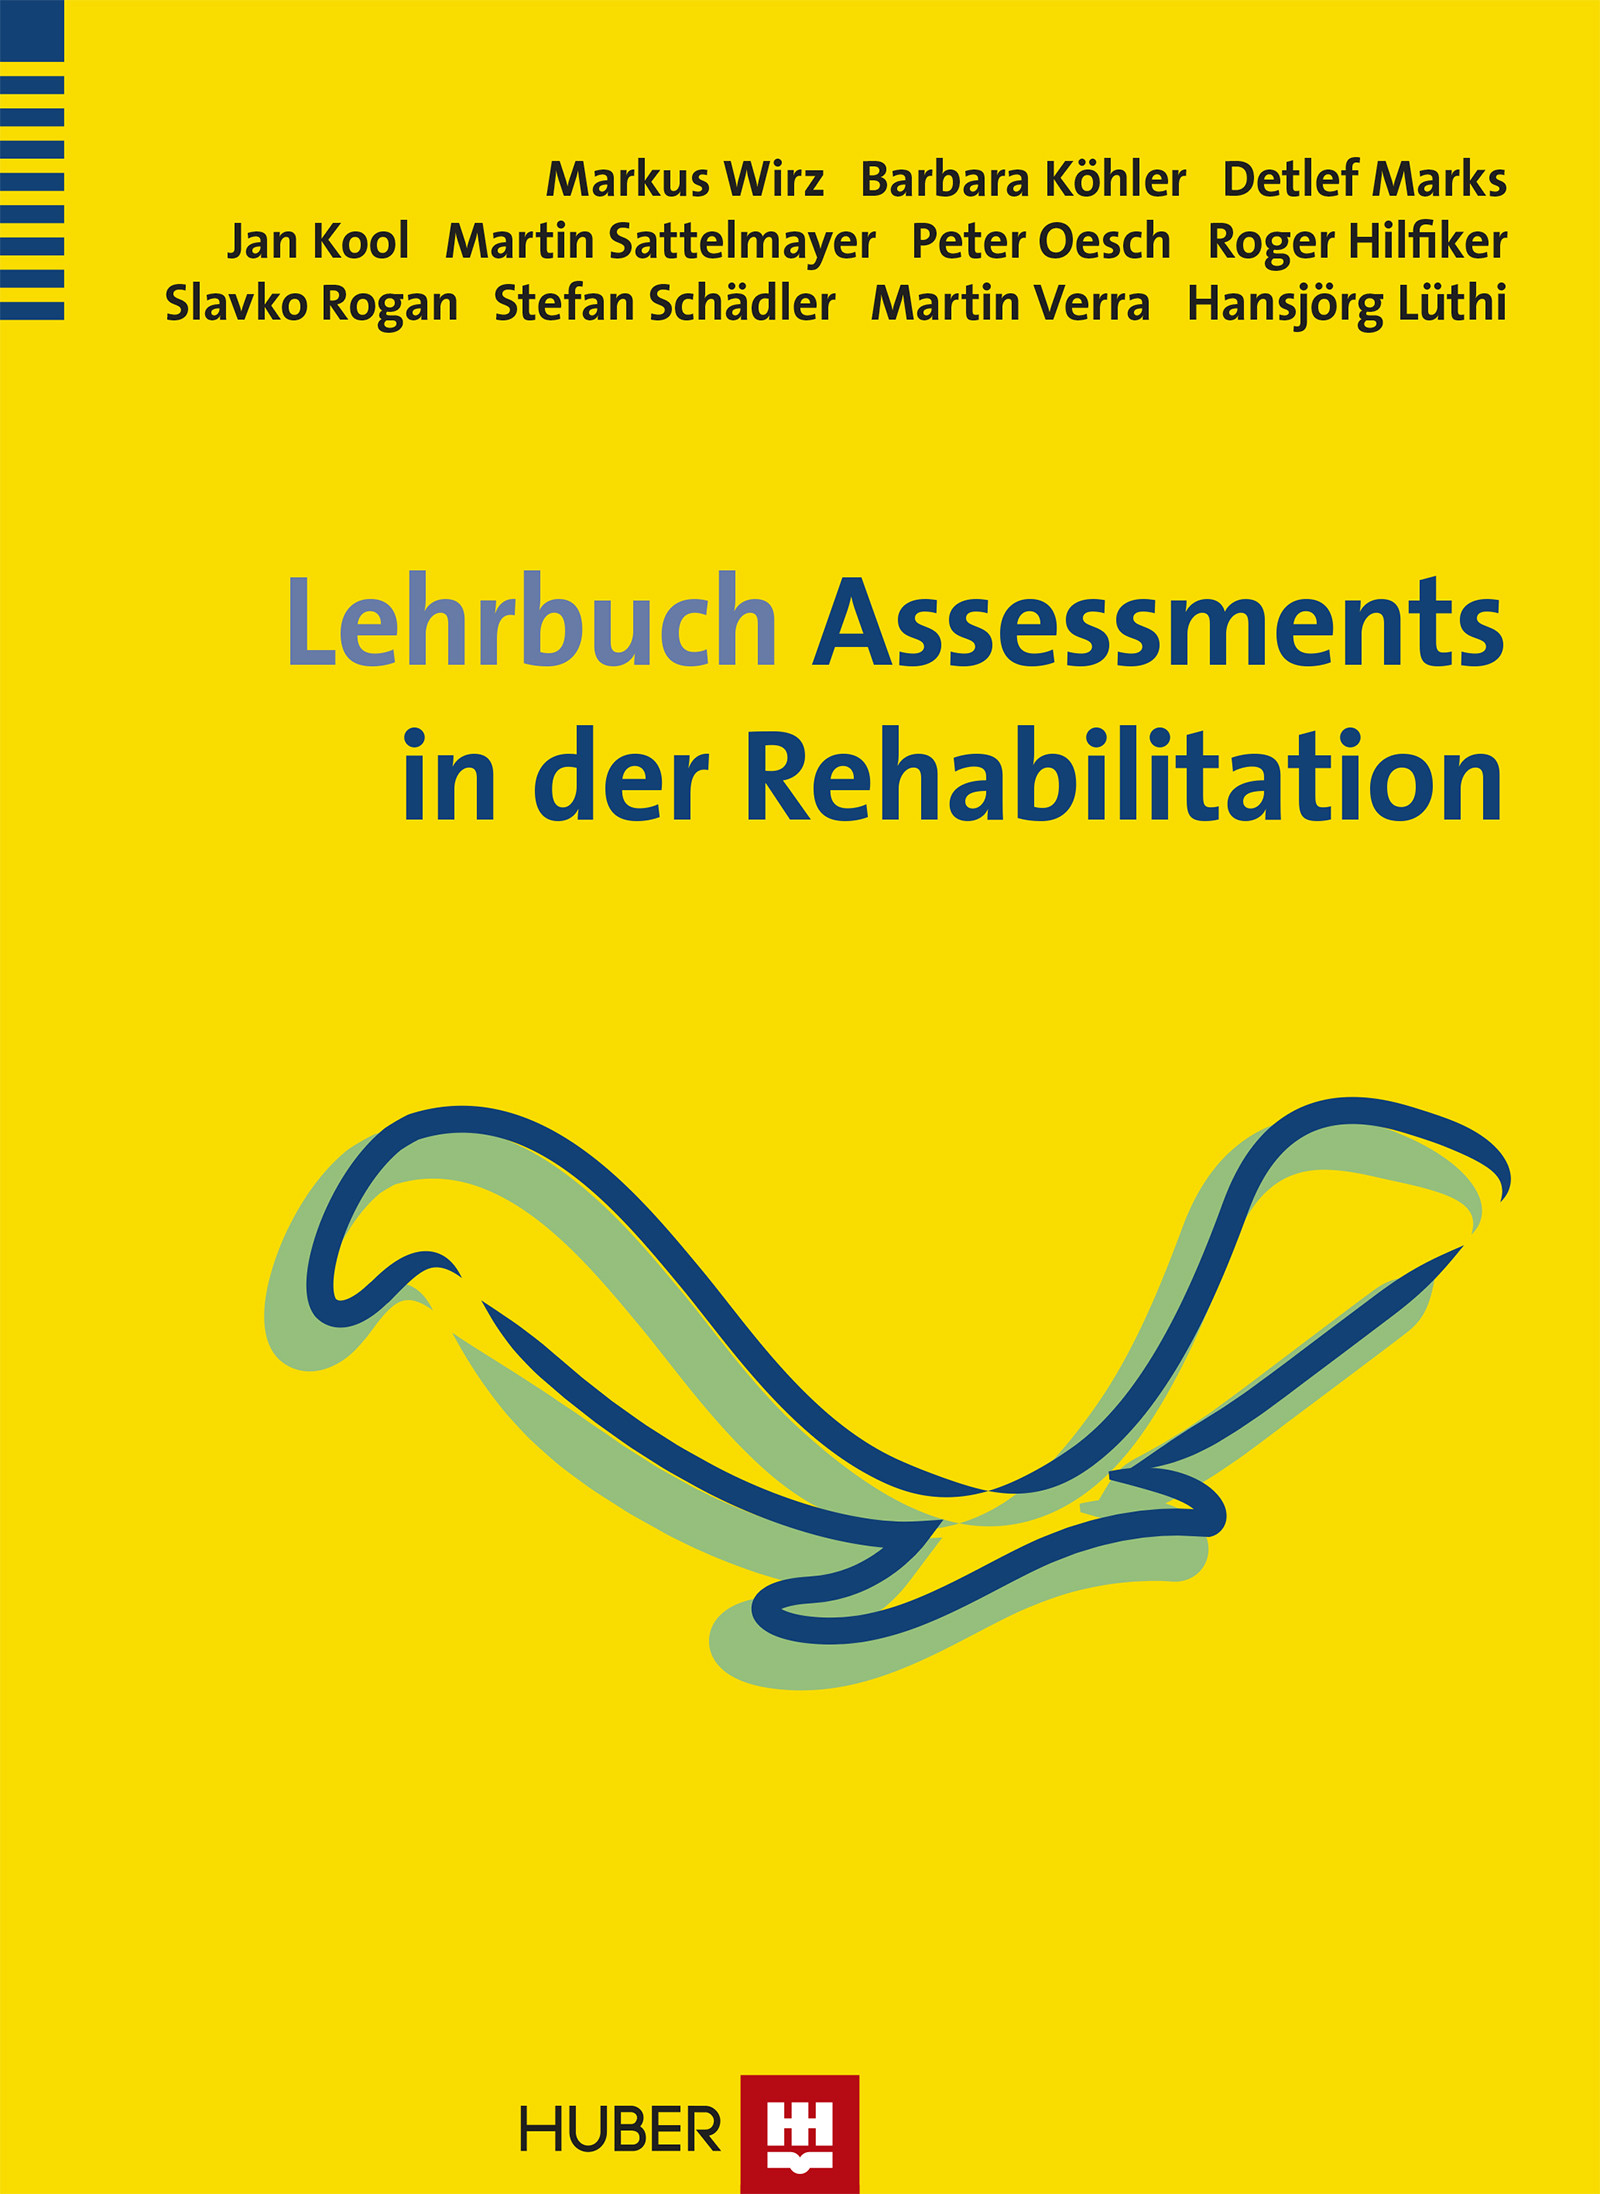 Lehrbuch Assessments in der Rehabilitation